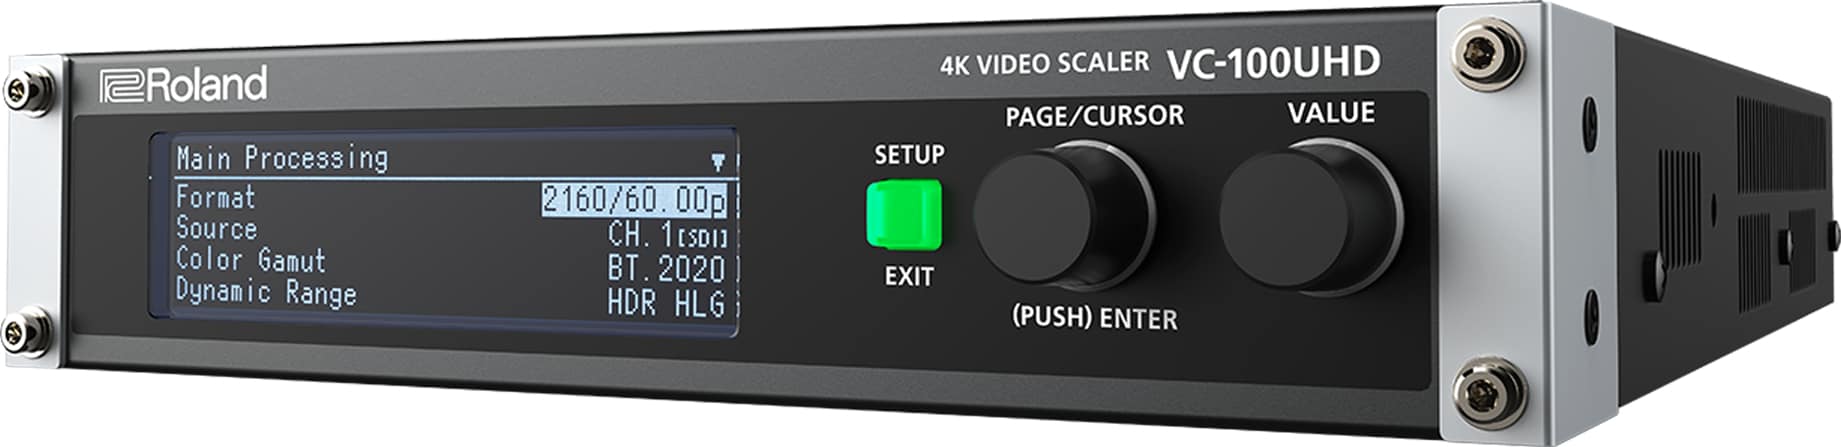 Roland 4K Video Scaler Converter